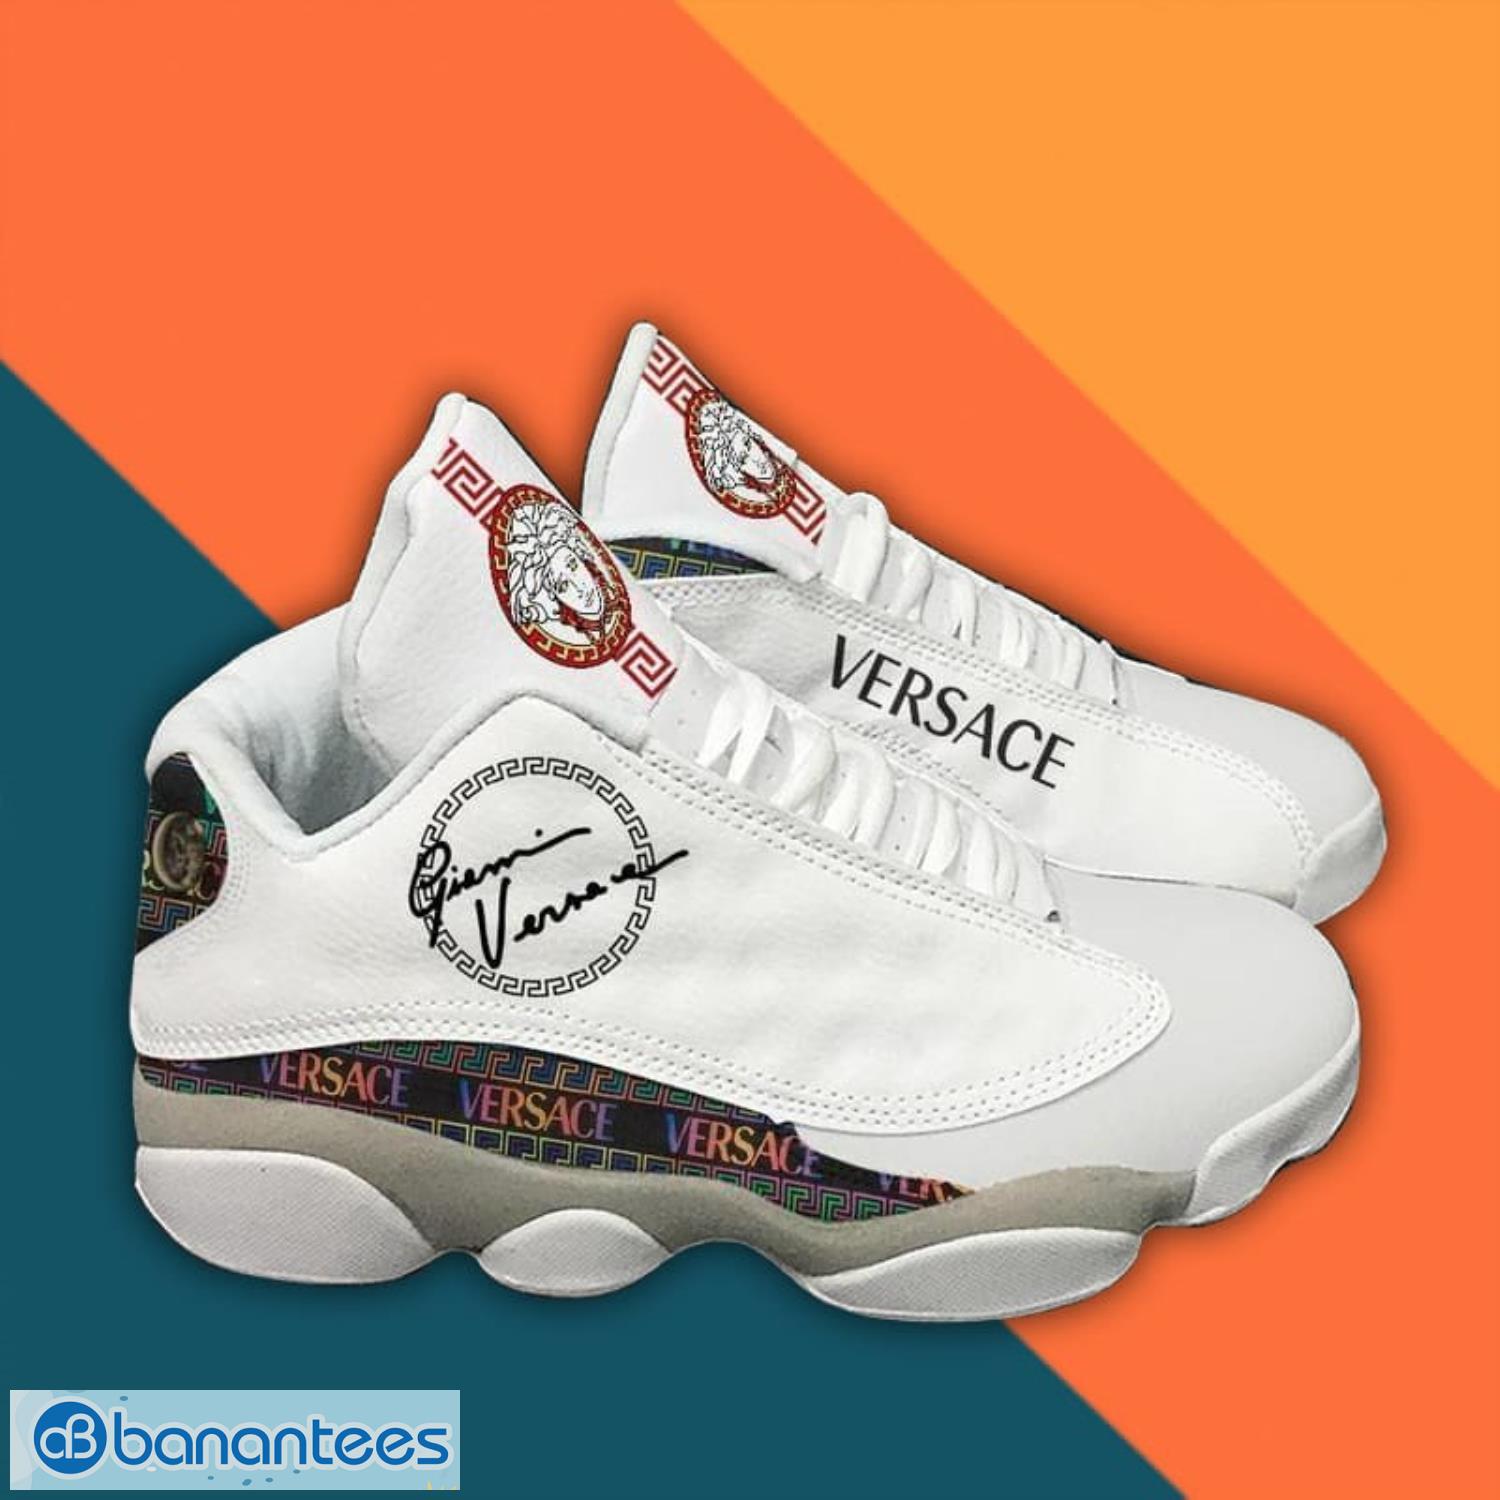 Versace Air Jordan 13 Sneaker Shoes Product Photo 2